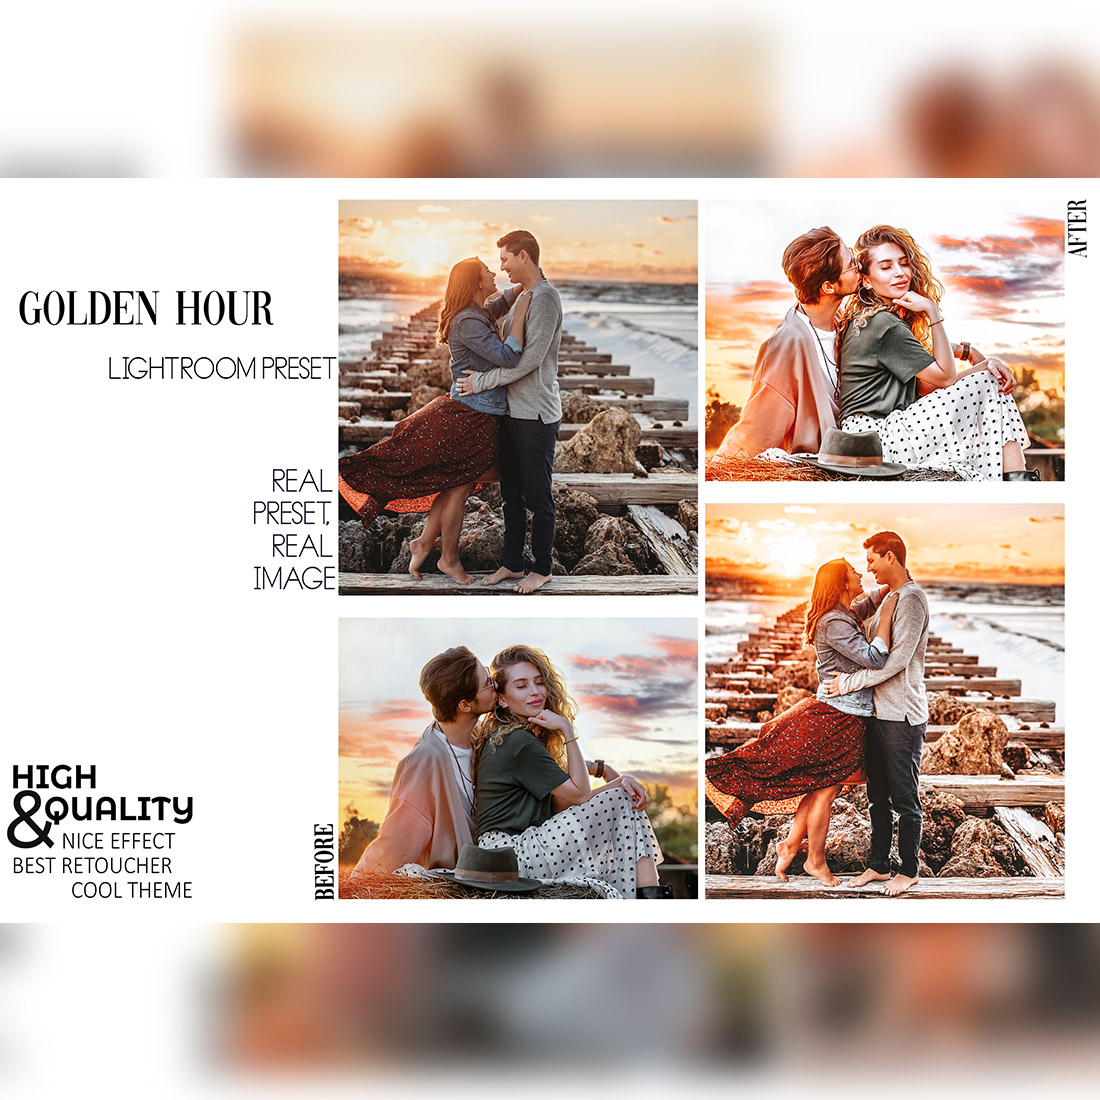 12 My Love Lightroom Presets, Golden Hour Mobile Preset, Romance Desktop, Blogger And Lifestyle Theme Instagram LR Filter DNG Portrait Warm preview image.